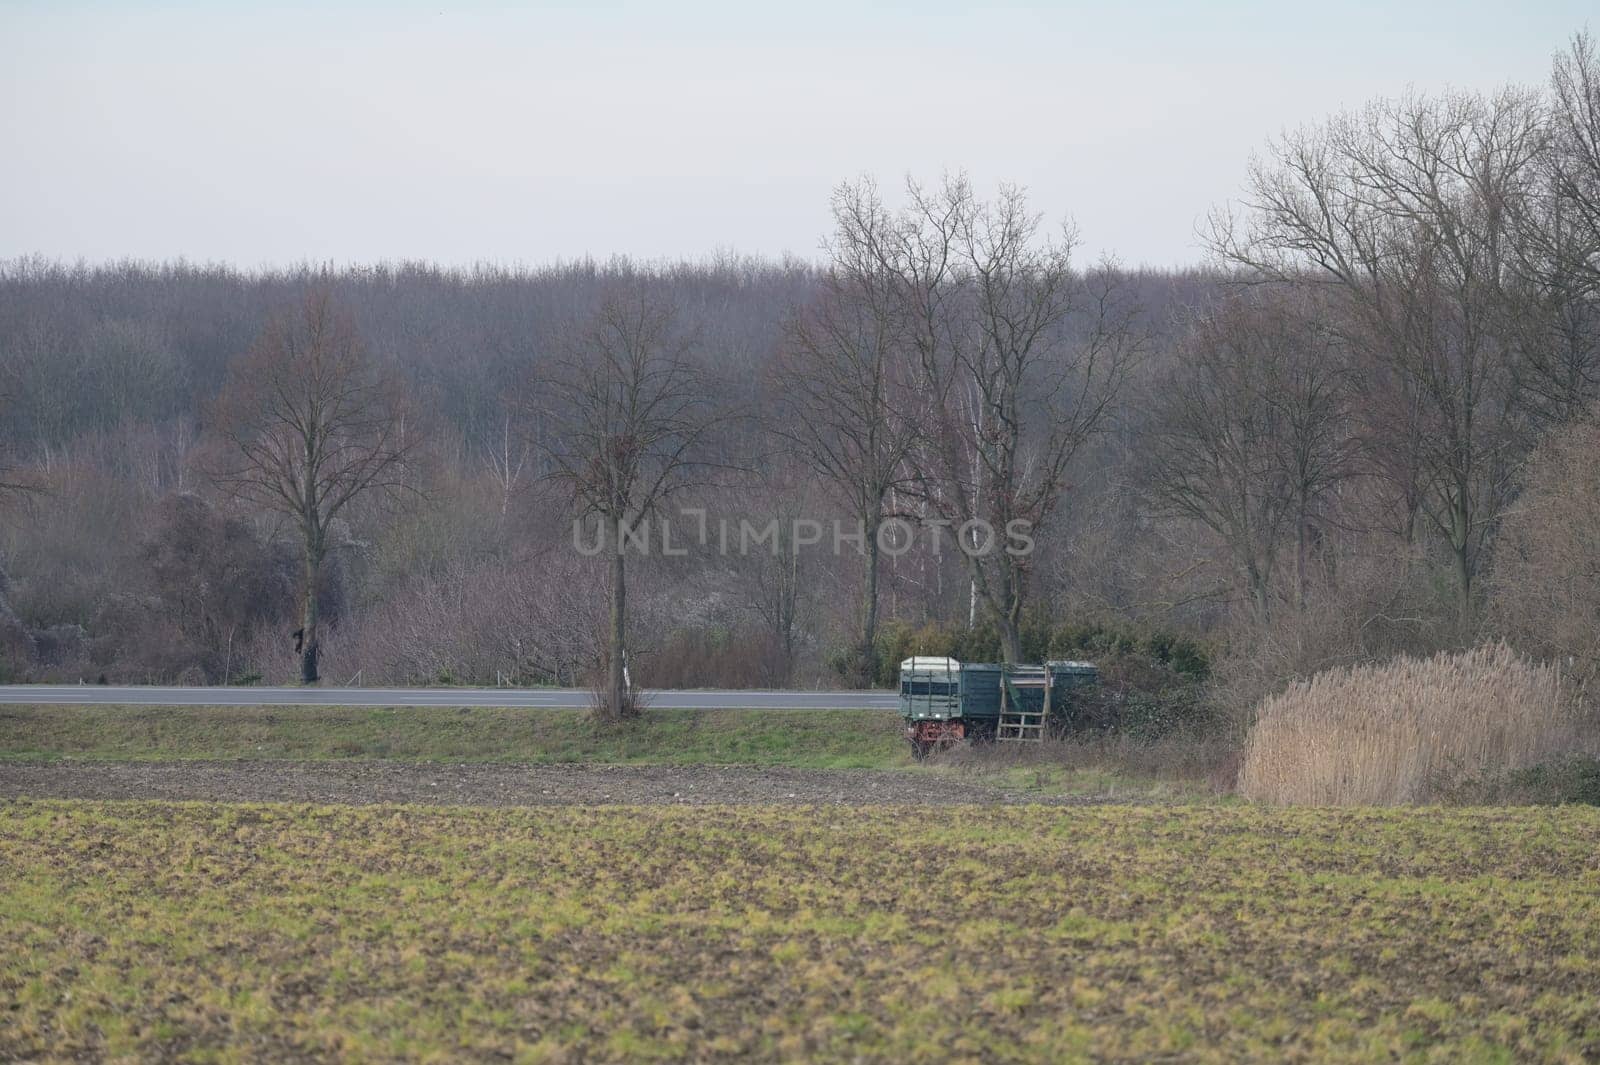 Agricultural trailer in a field near Meerbusch, Germany by rherrmannde